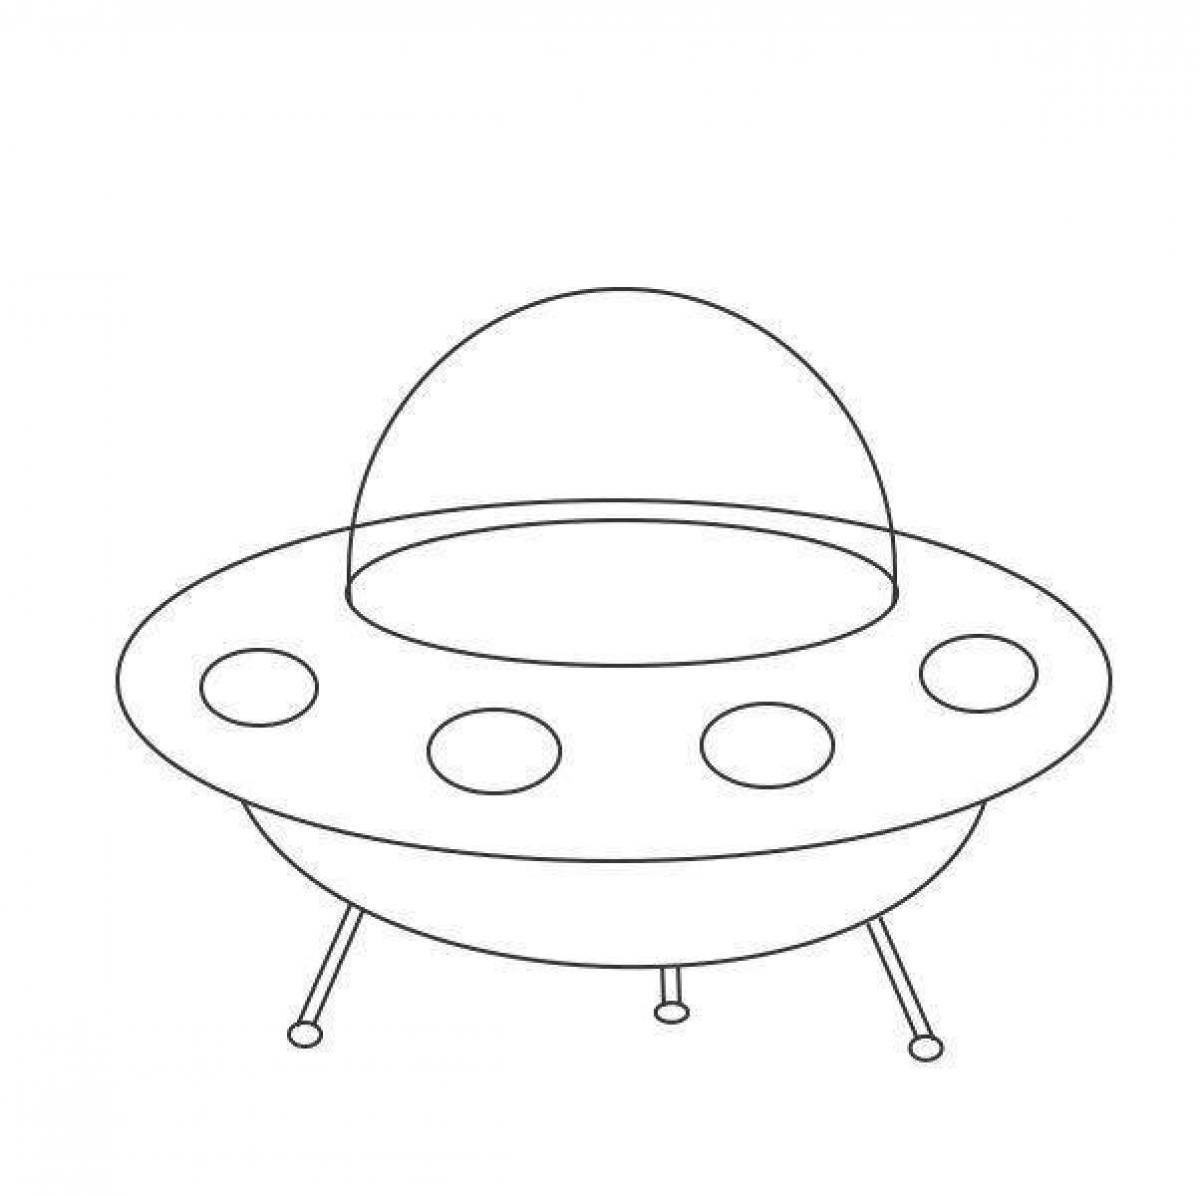 Coloring book joyful flying saucer